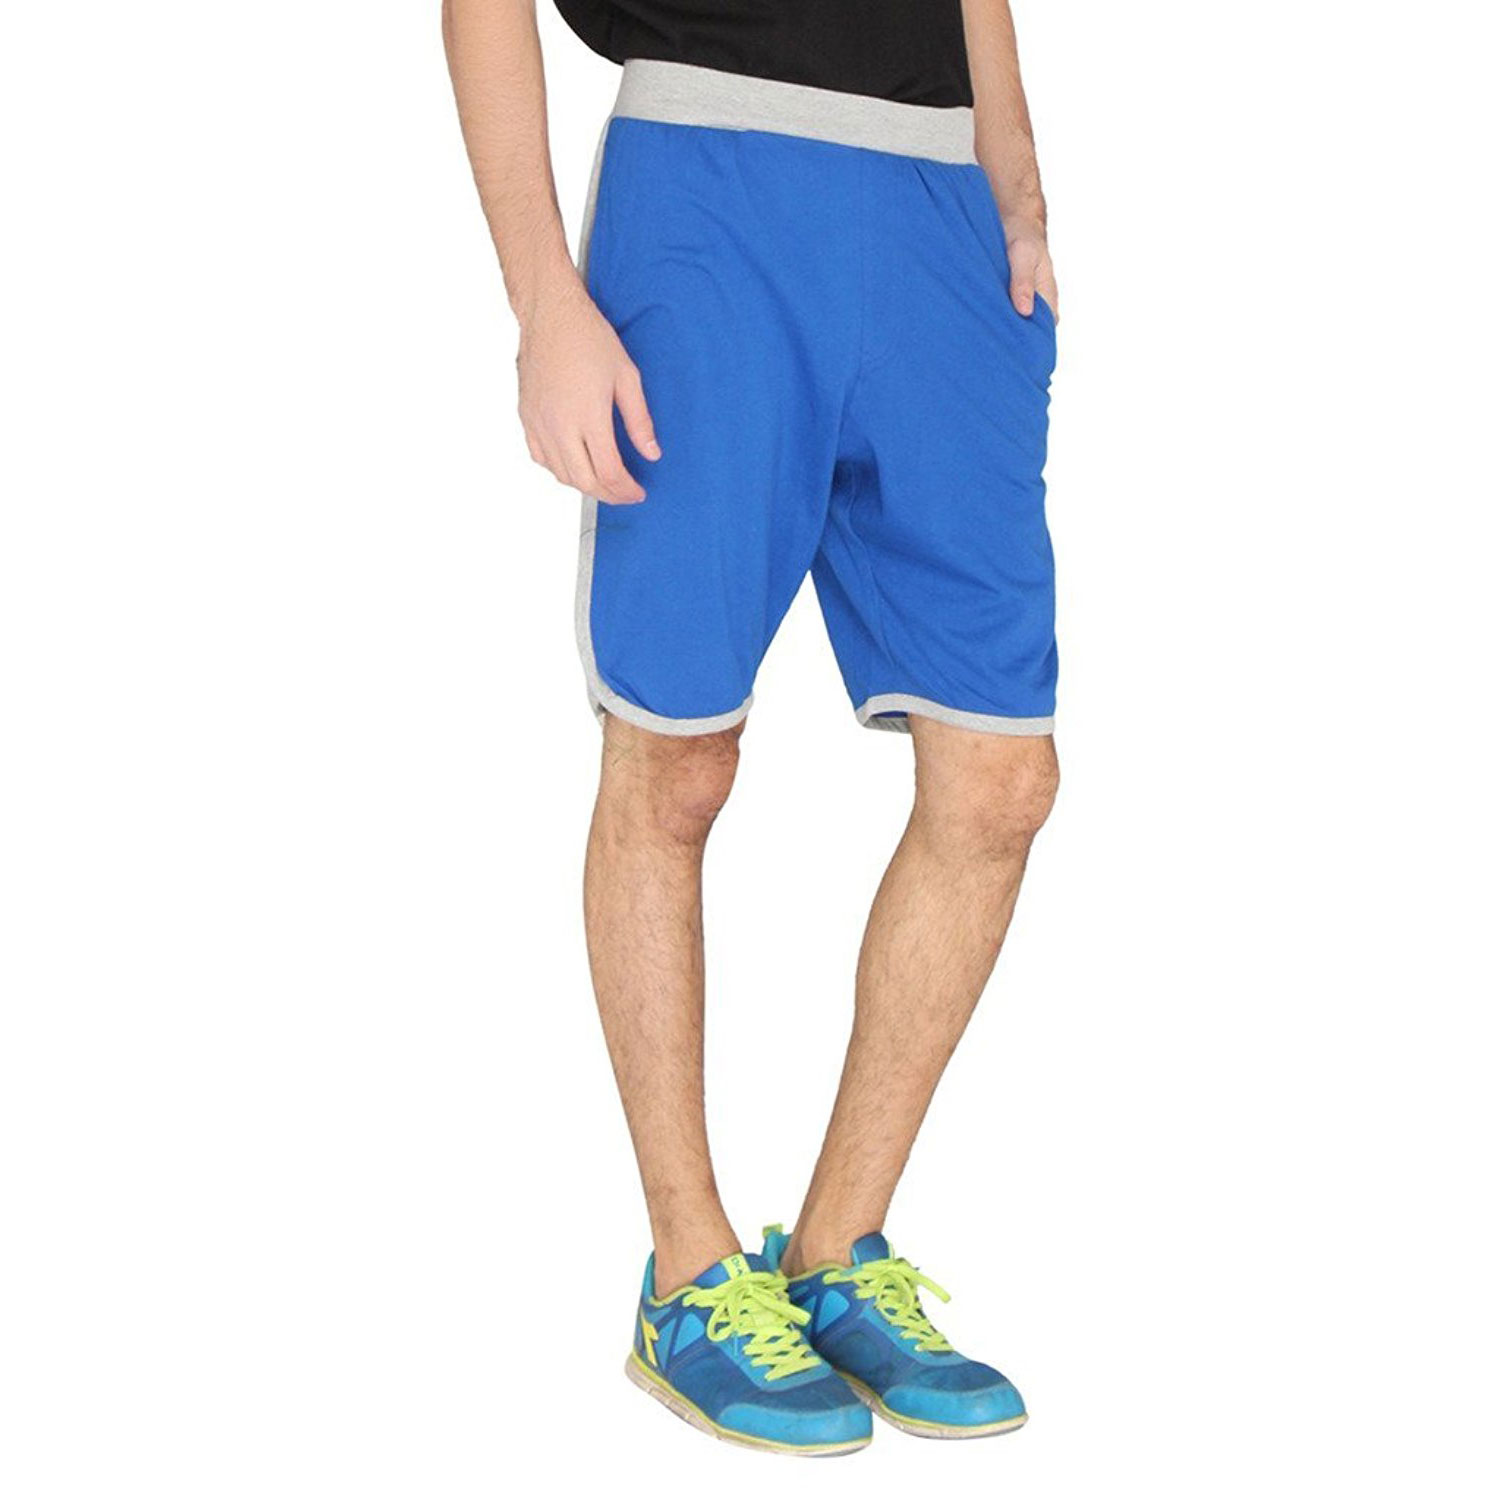   LUCfashion Men's Exclusive Premium Fashionable Sports Shorts